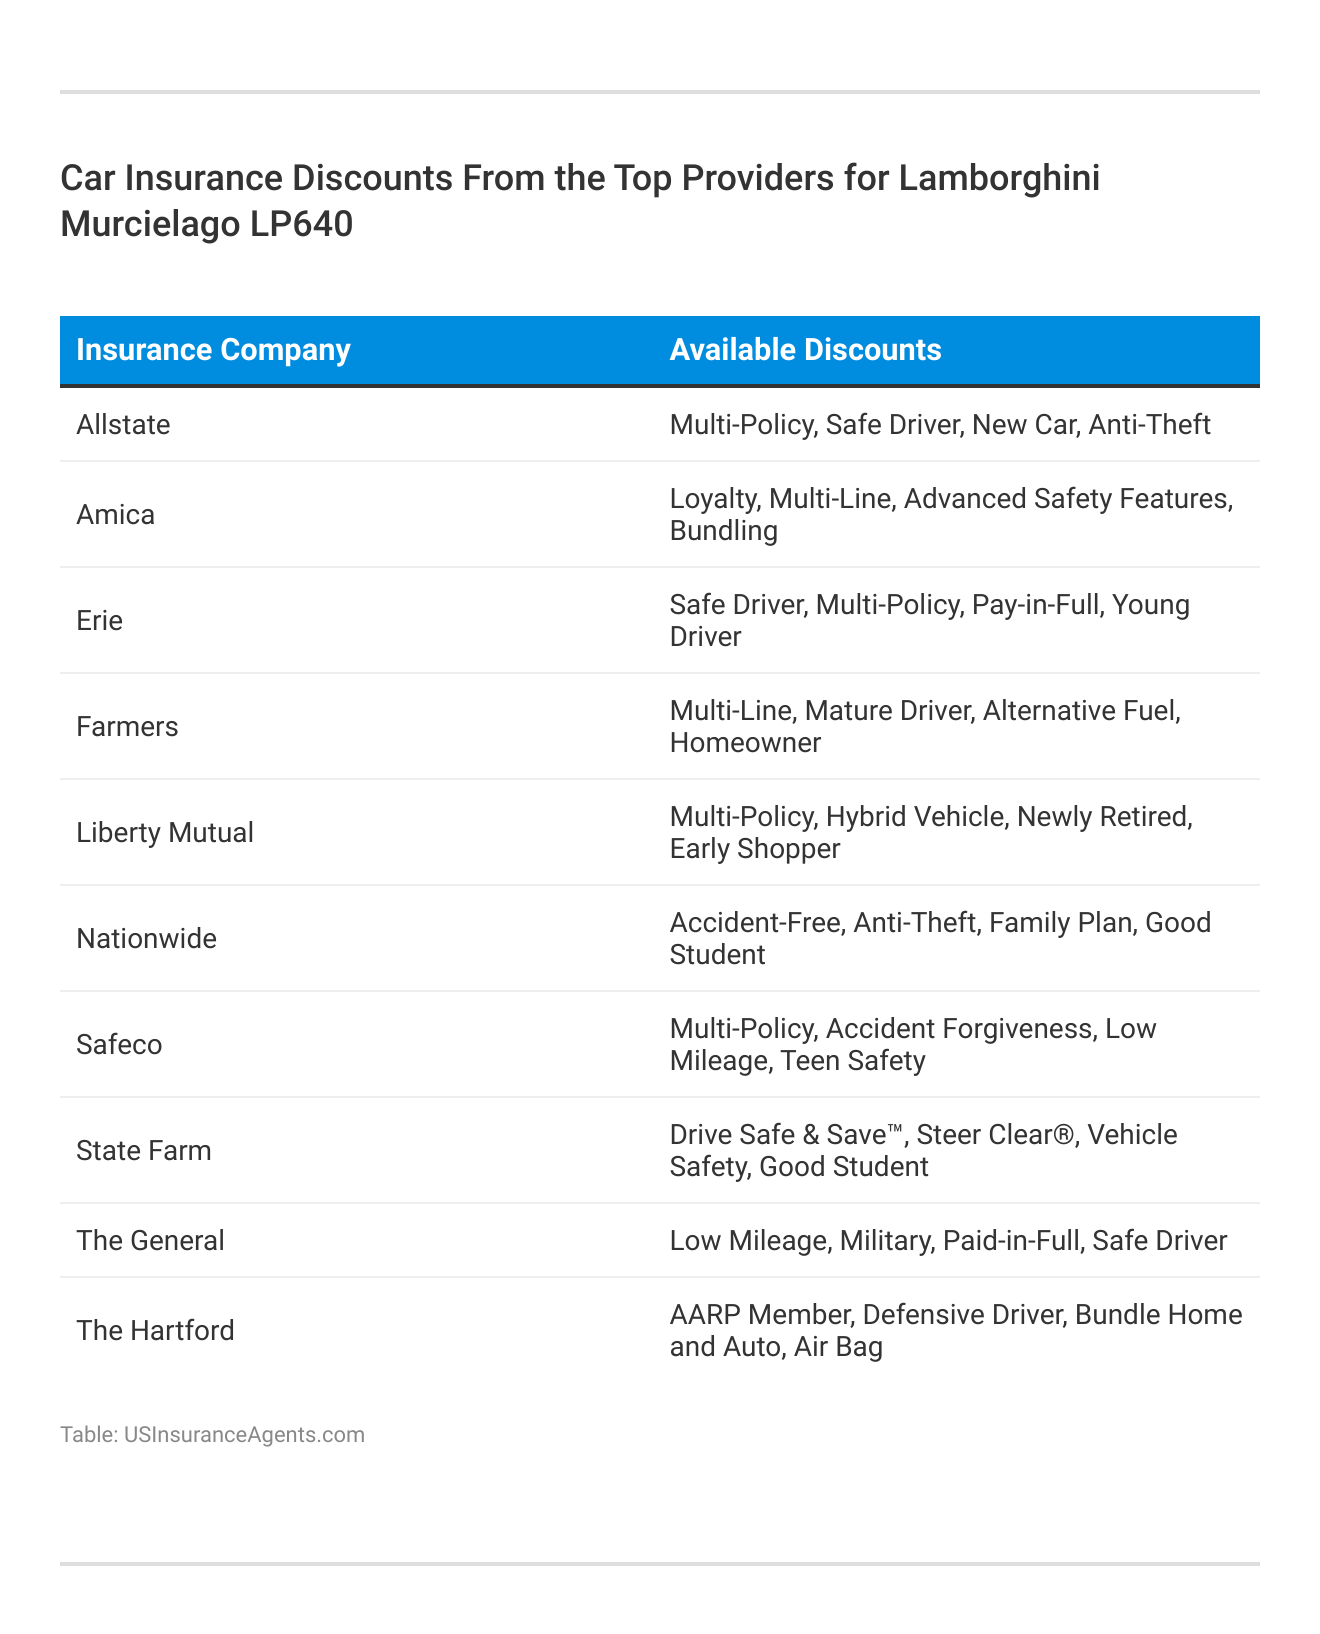 <h3>Car Insurance Discounts From the Top Providers for Lamborghini Murcielago LP640</h3>